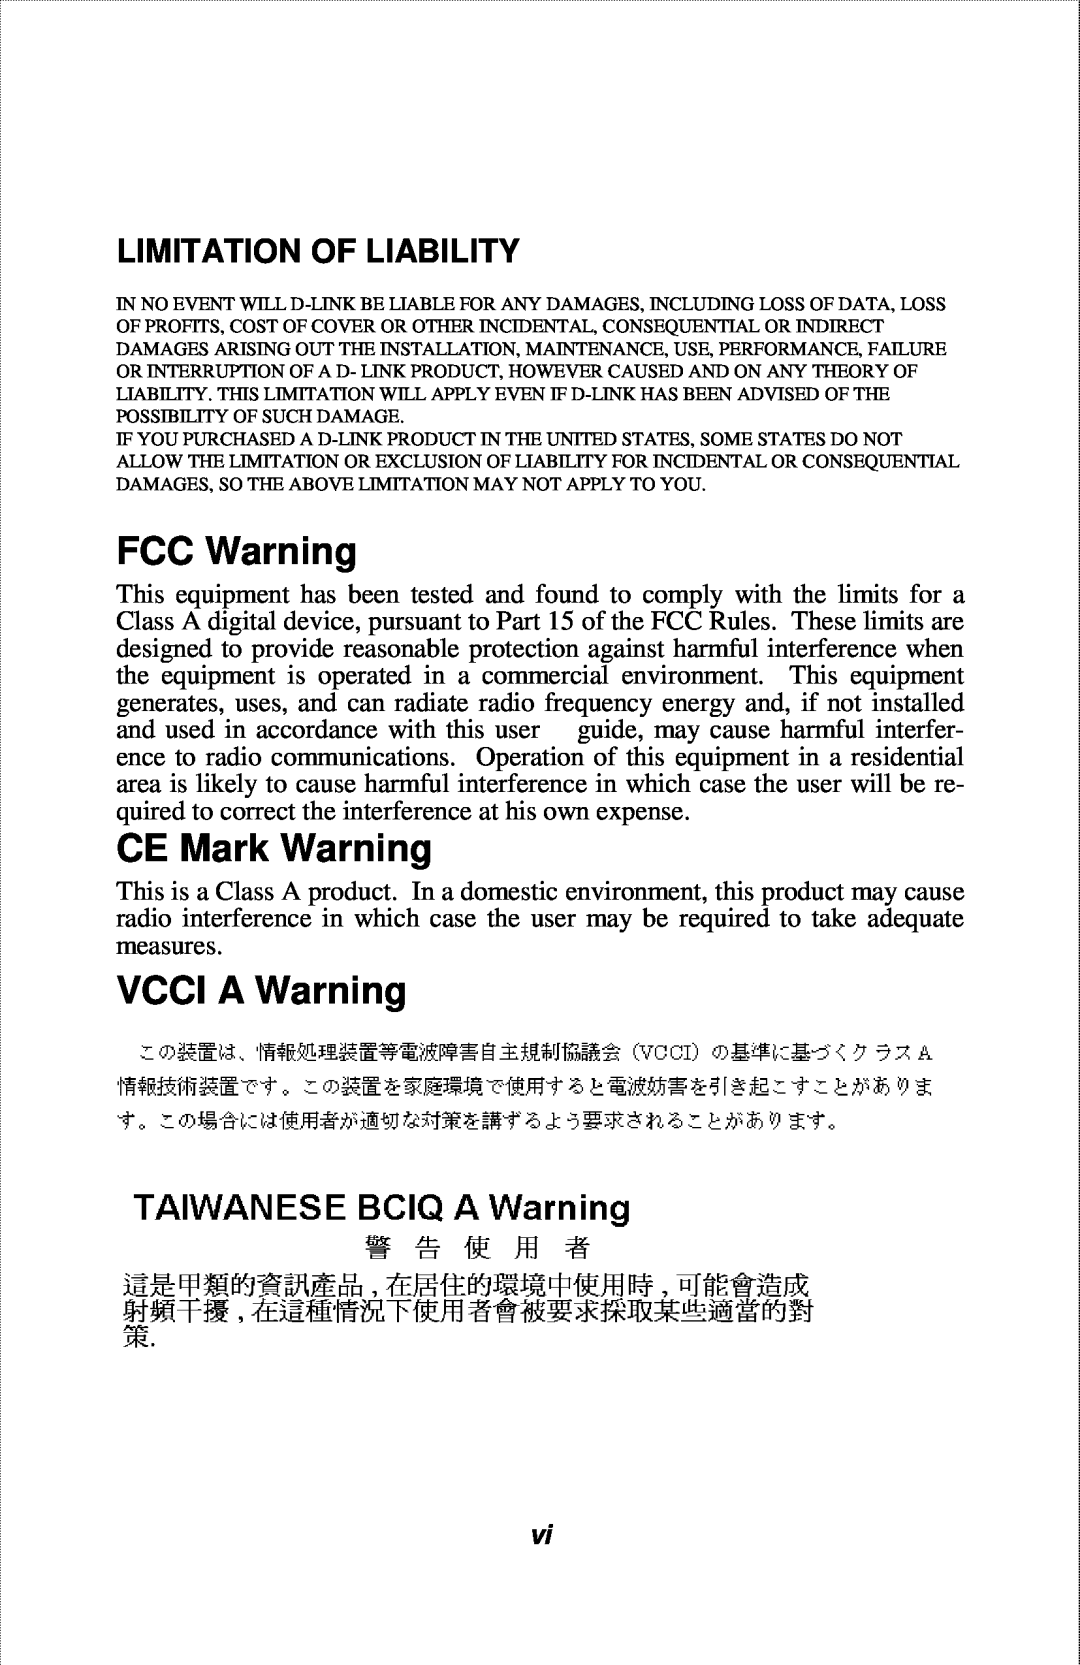 D-Link DFE-2600 manual FCC Warning, CE Mark Warning, VCCI A Warning, Limitation Of Liability 